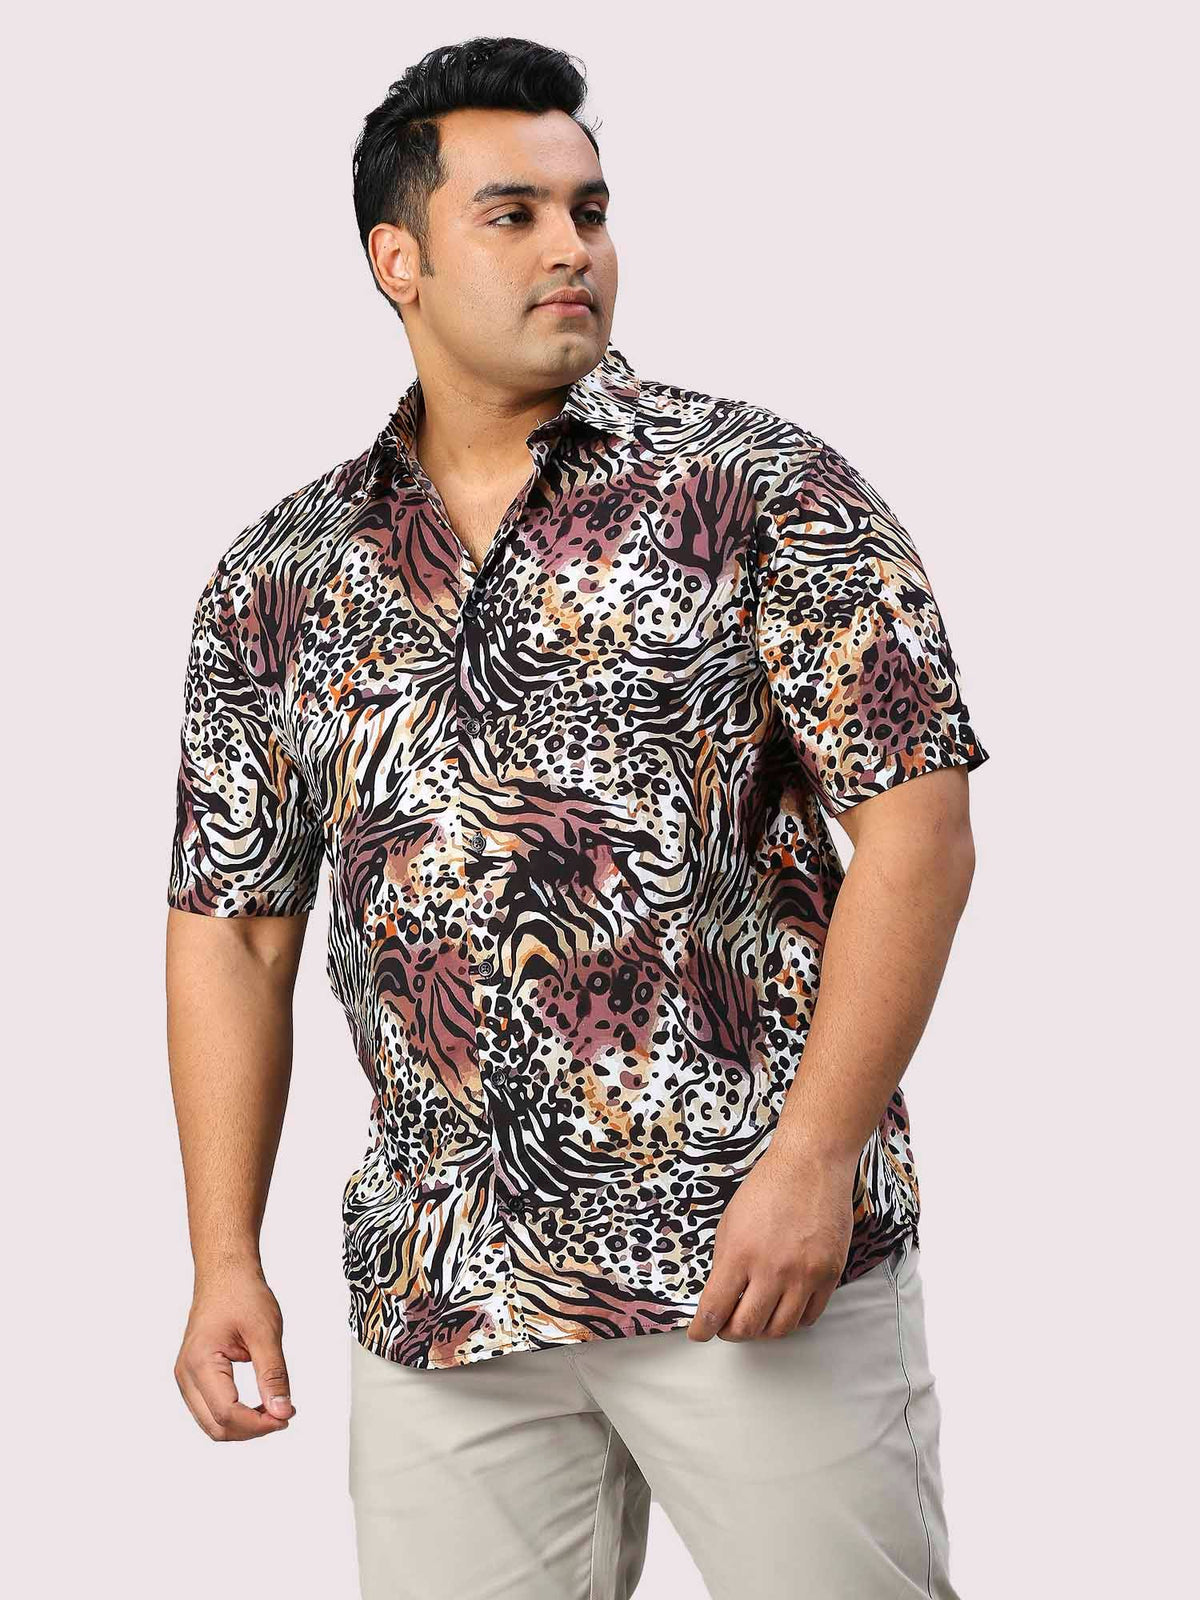 Beastly Printed Half Sleeve Men's Plus Size Shirt - Guniaa Fashions